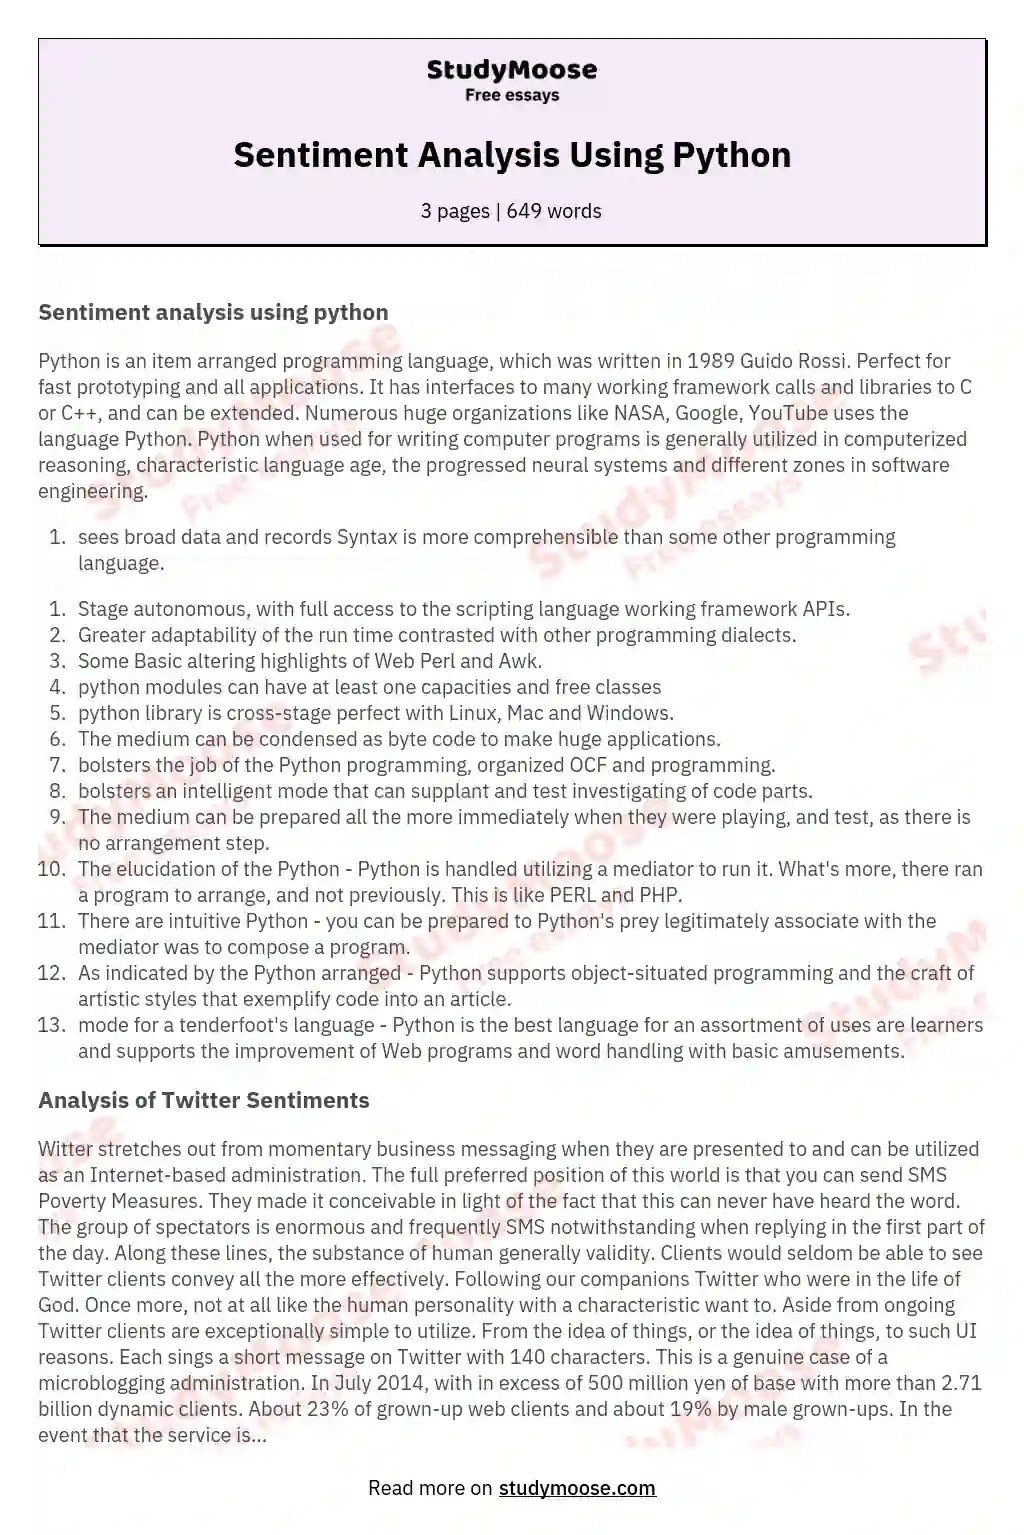 Sentiment Analysis Using Python essay